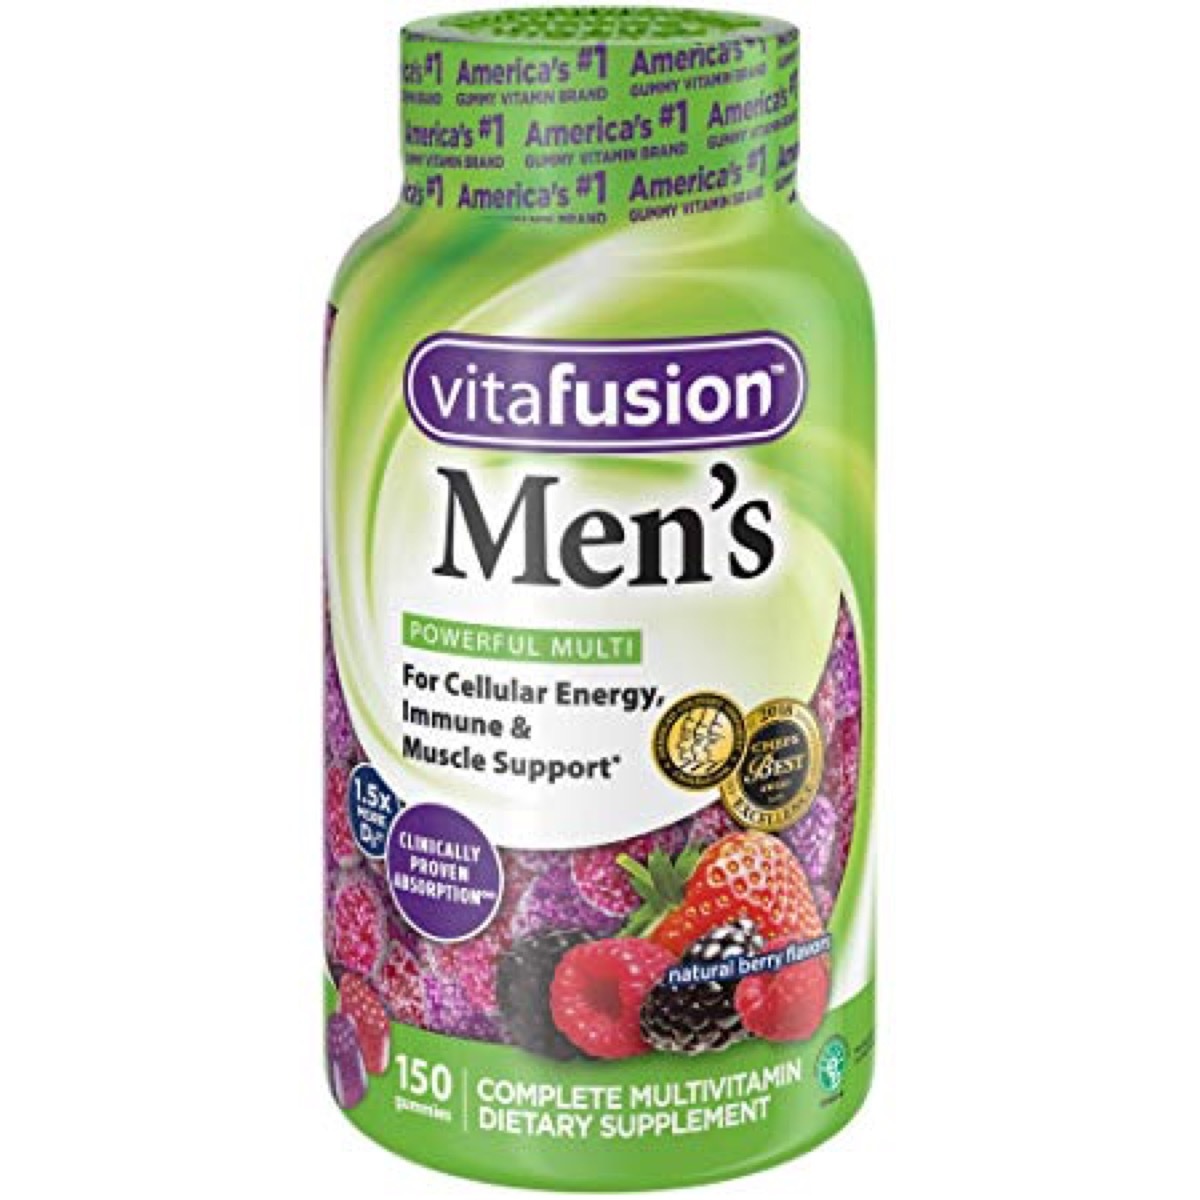 vitafusion, best multivitamin for men 